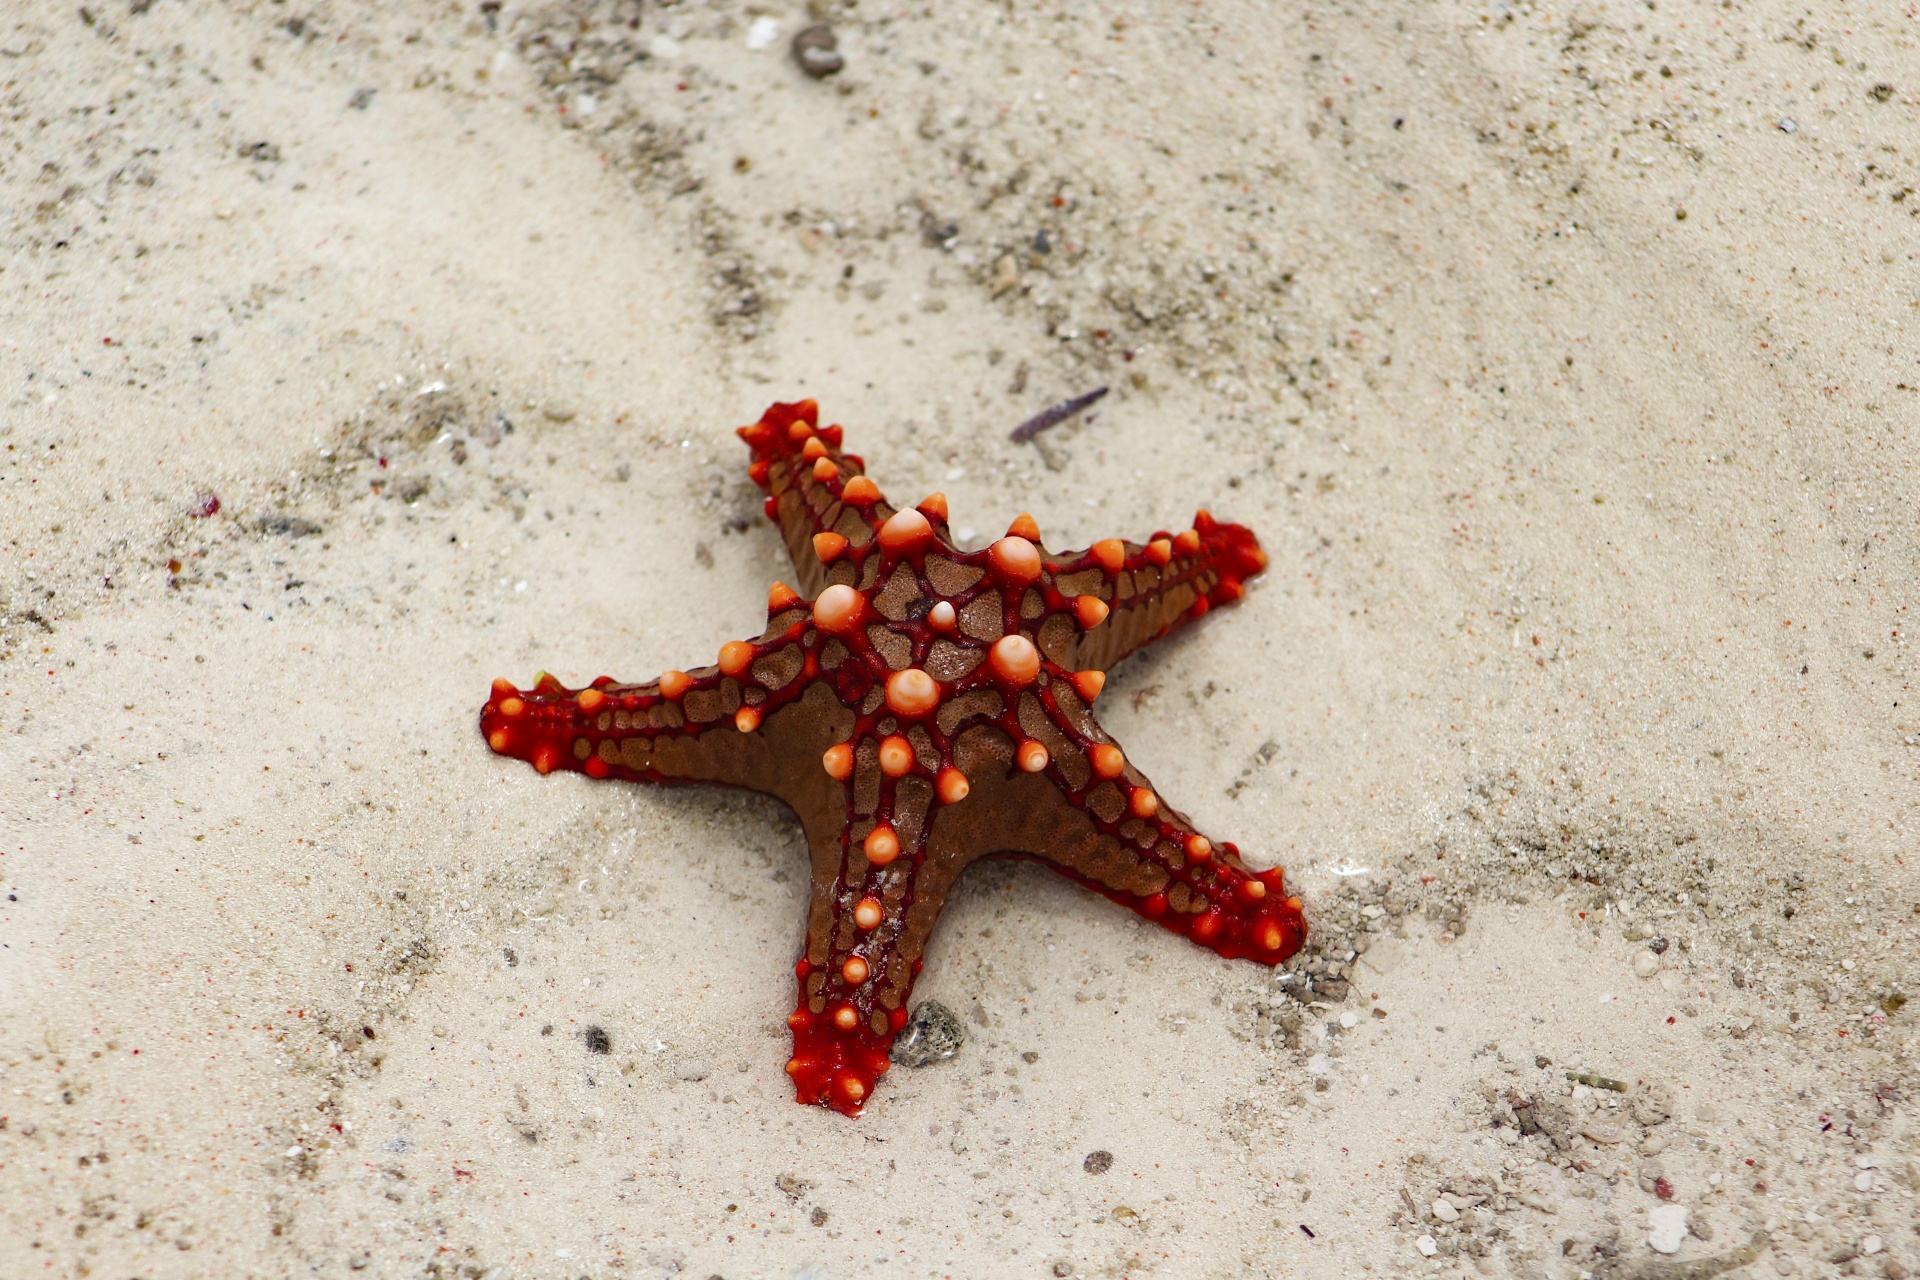 Starfish have an eye on each arm